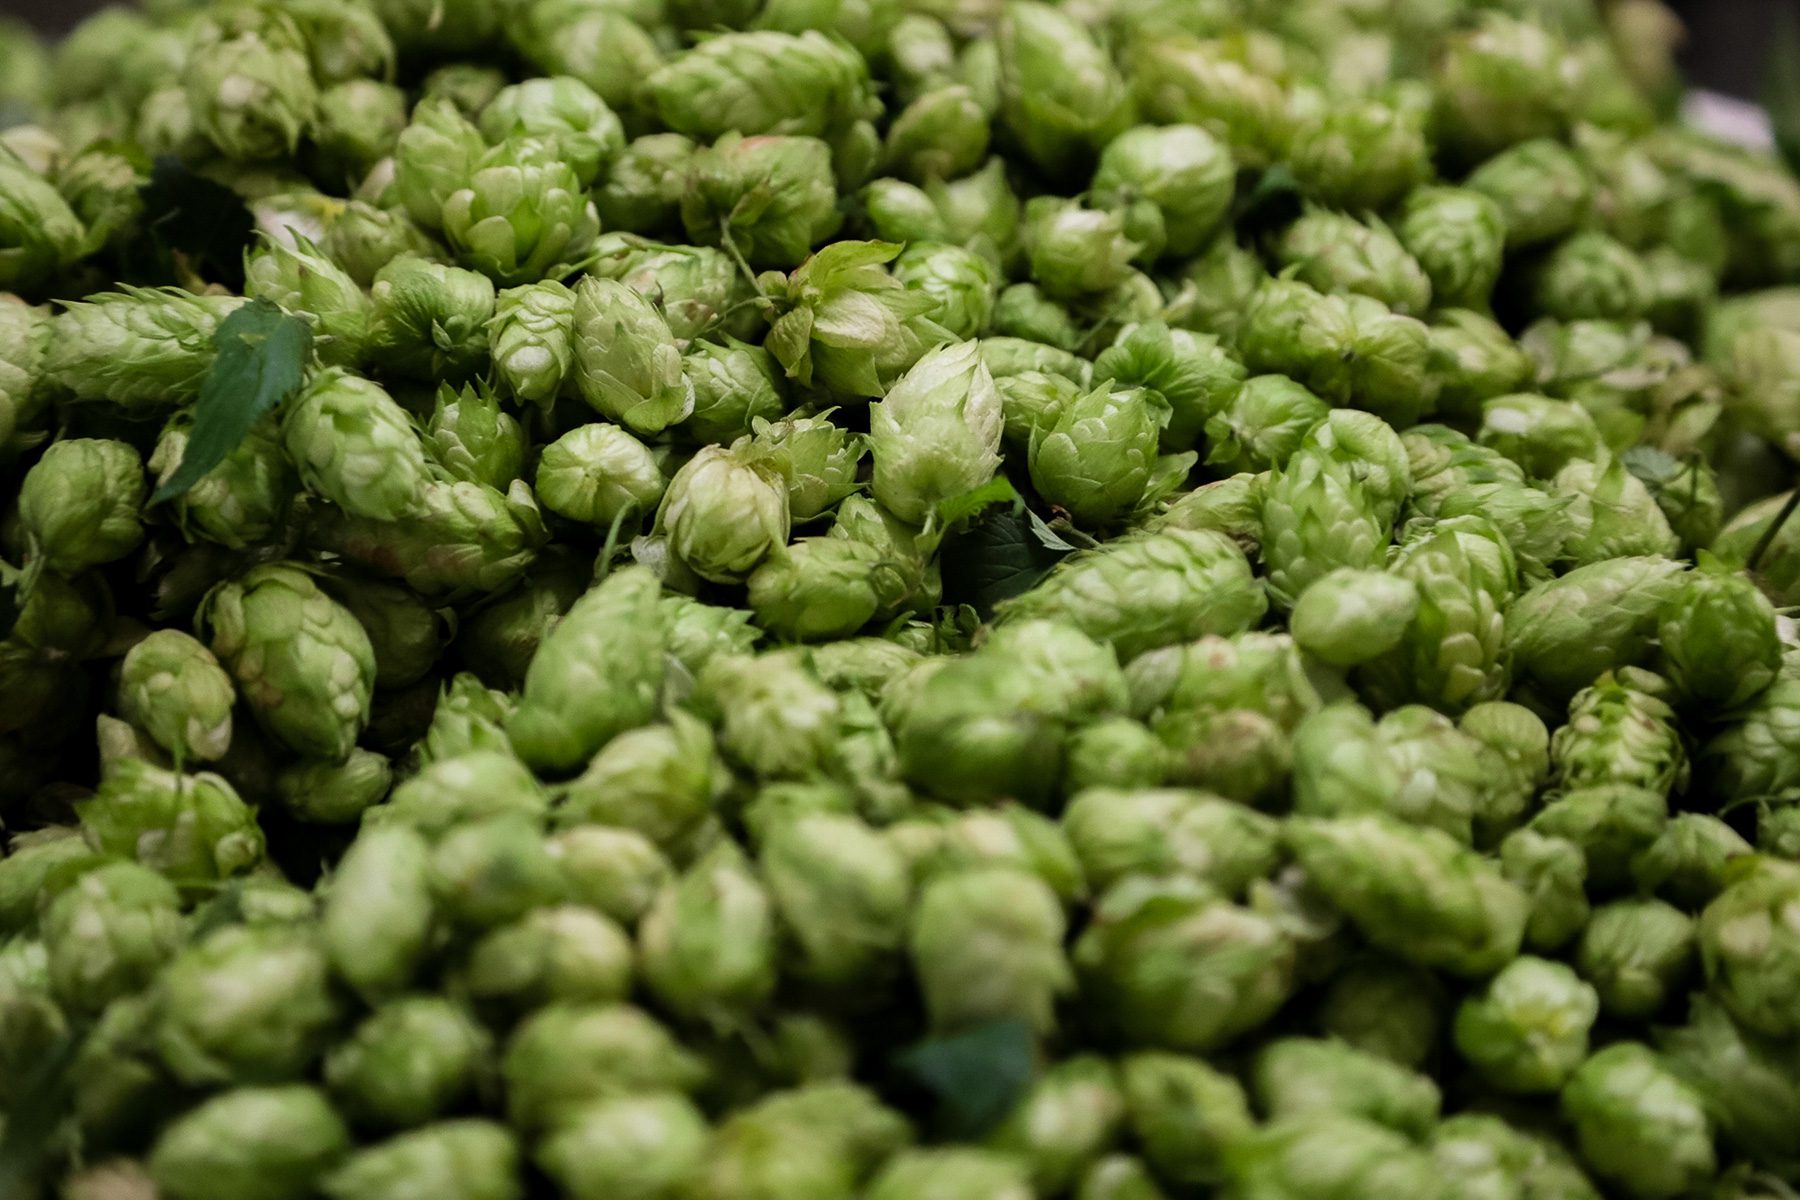 A vibrant green pile of freshly harvested hops